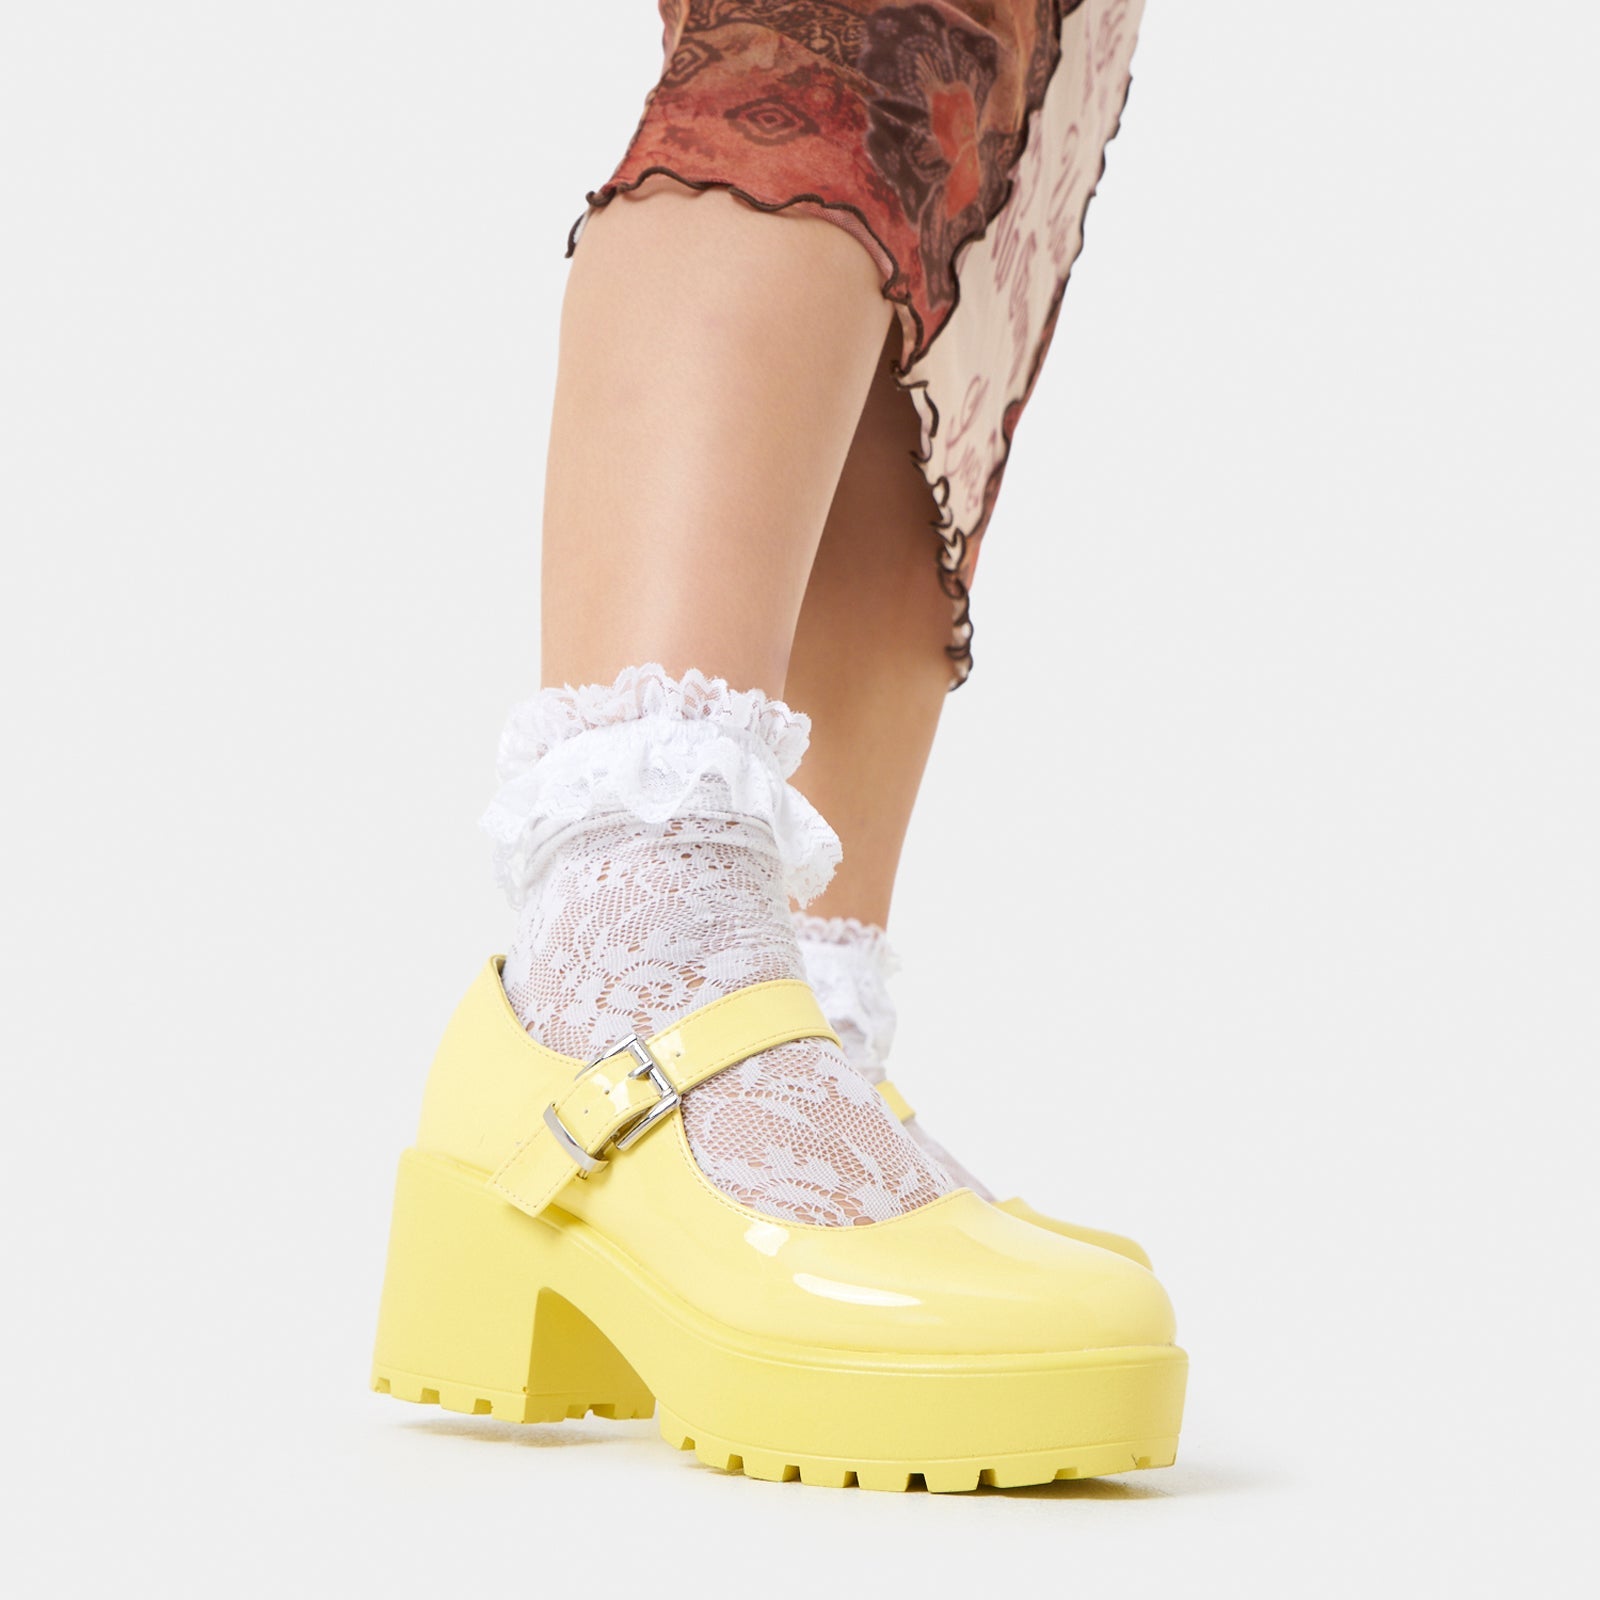 Tira Mary Jane Shoes 'Sunshine Yellow Edition' - Mary Janes - KOI Footwear - Yellow - Three-Quarter View